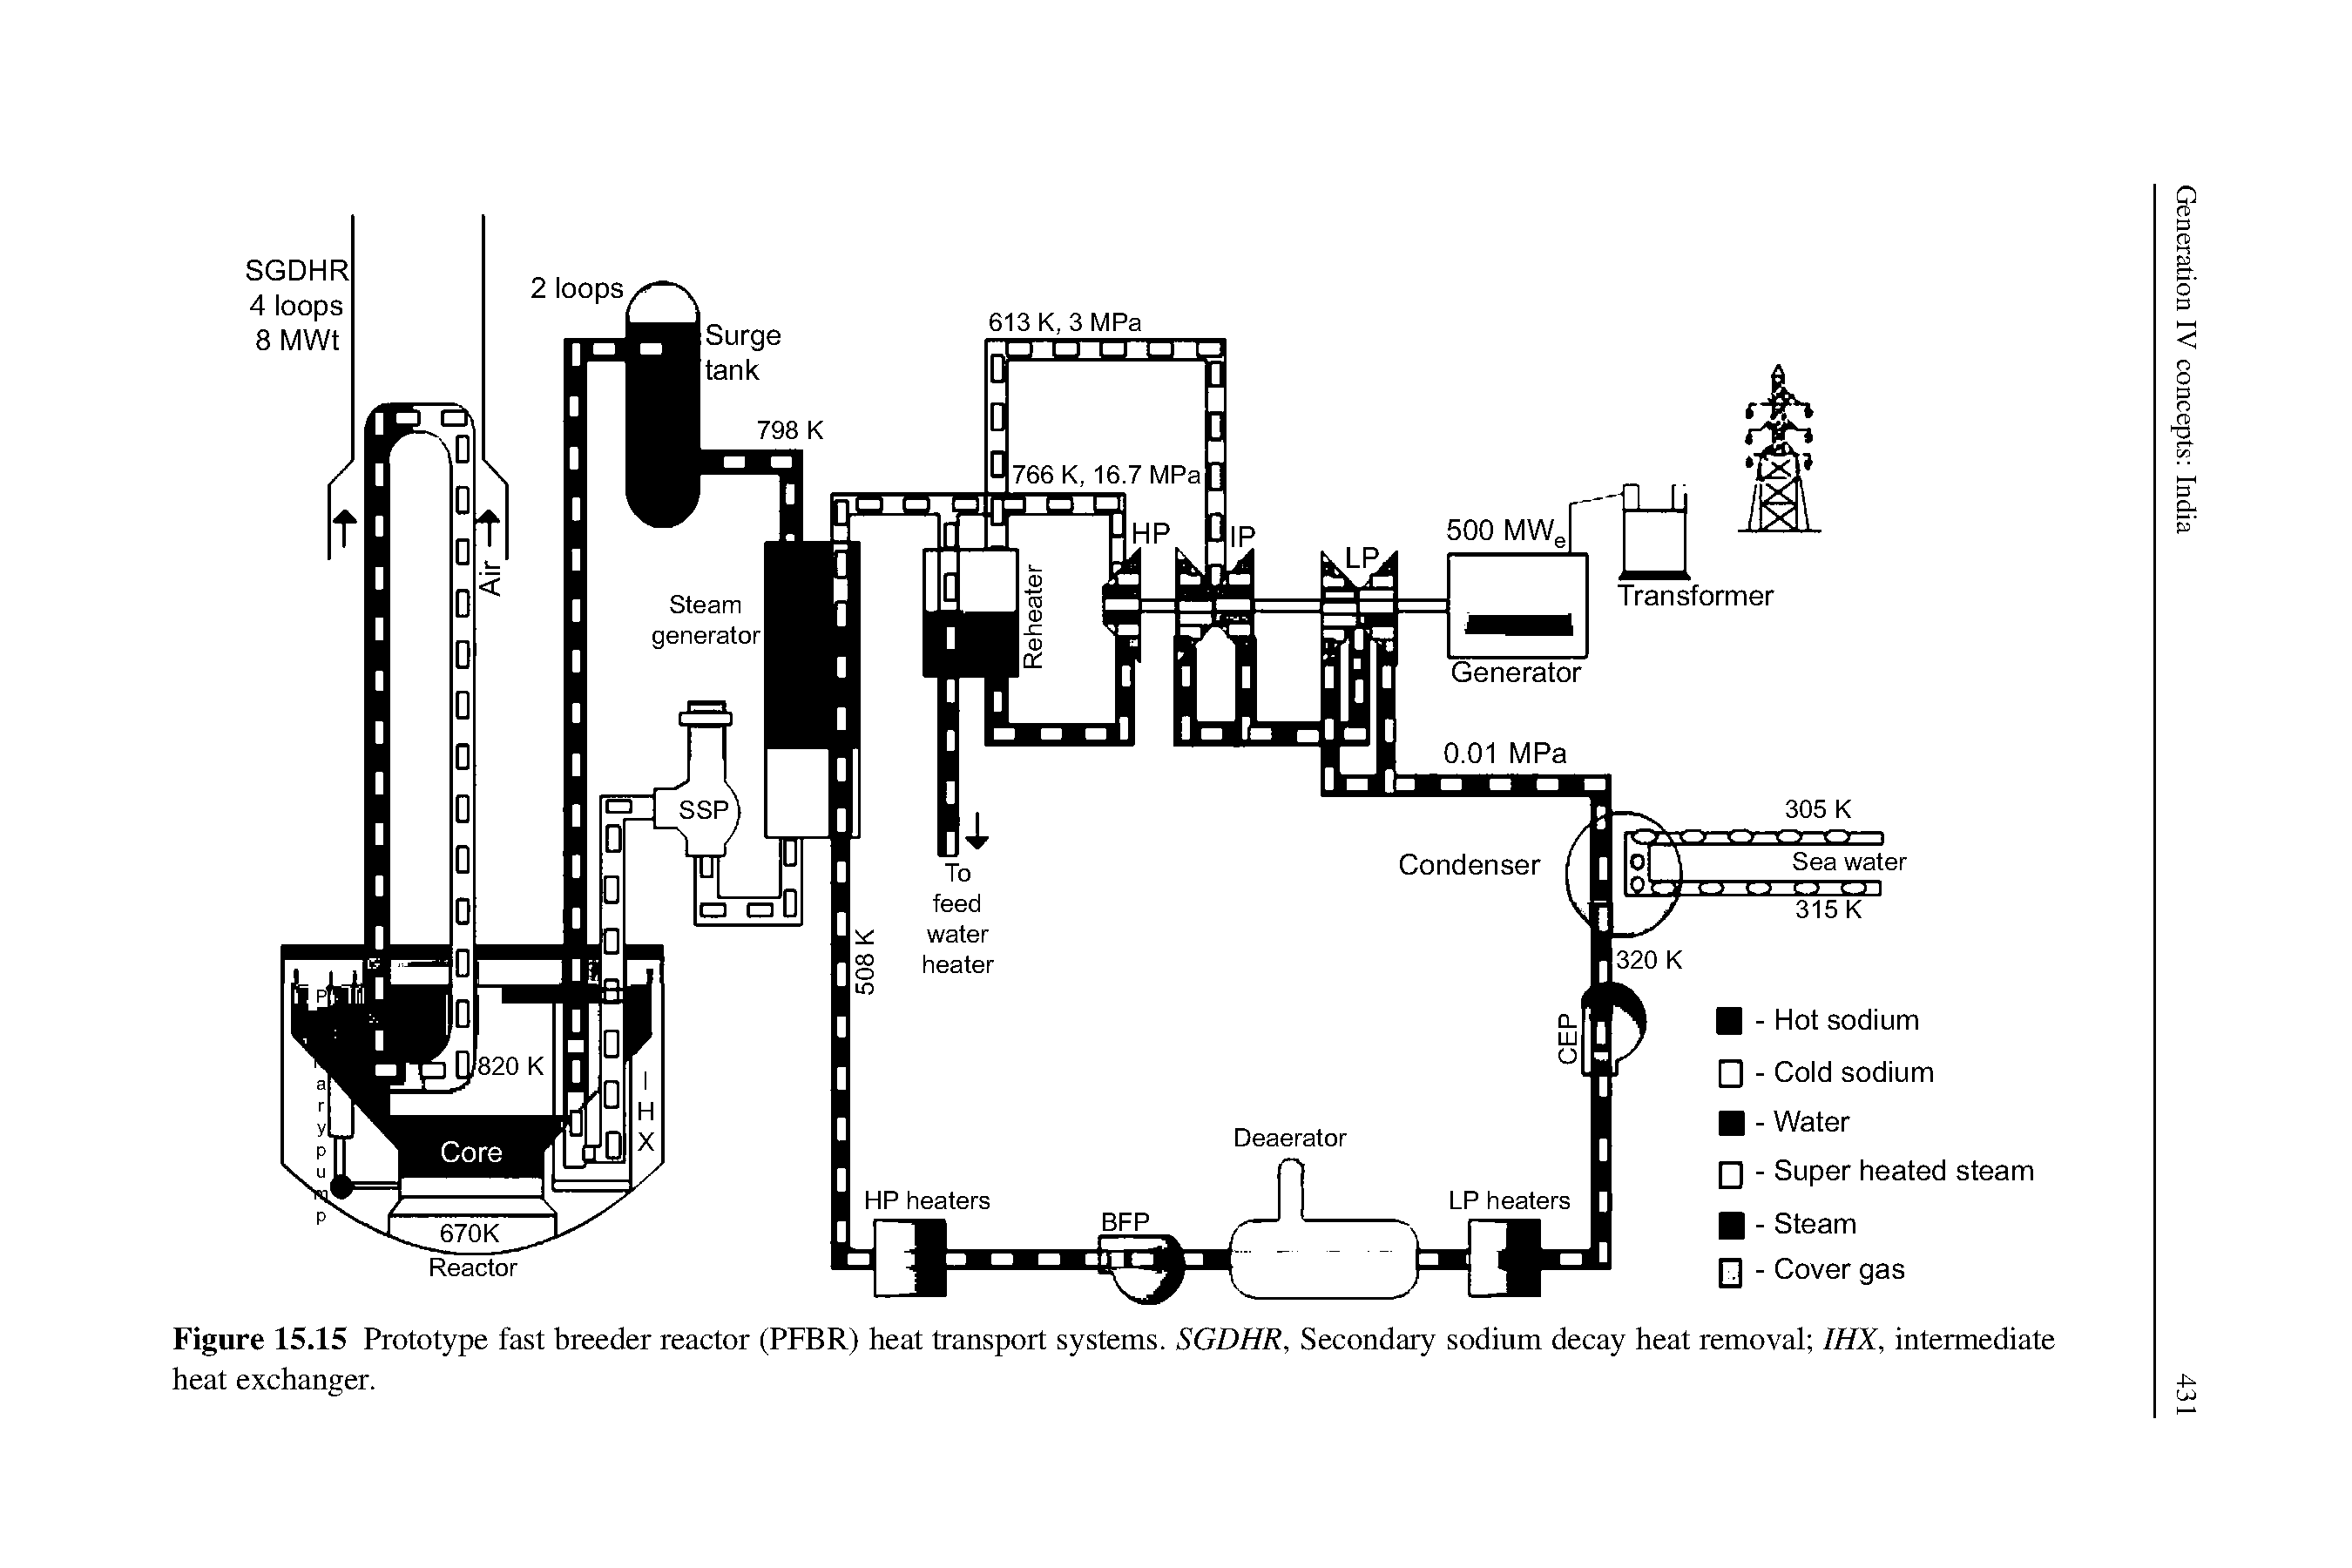 Figure 15.15 Prototype fast breeder reactor (PFBR) heat transport systems. SGDHR, Secondary sodium decay heat removal IHX, intermediate heat exchanger.